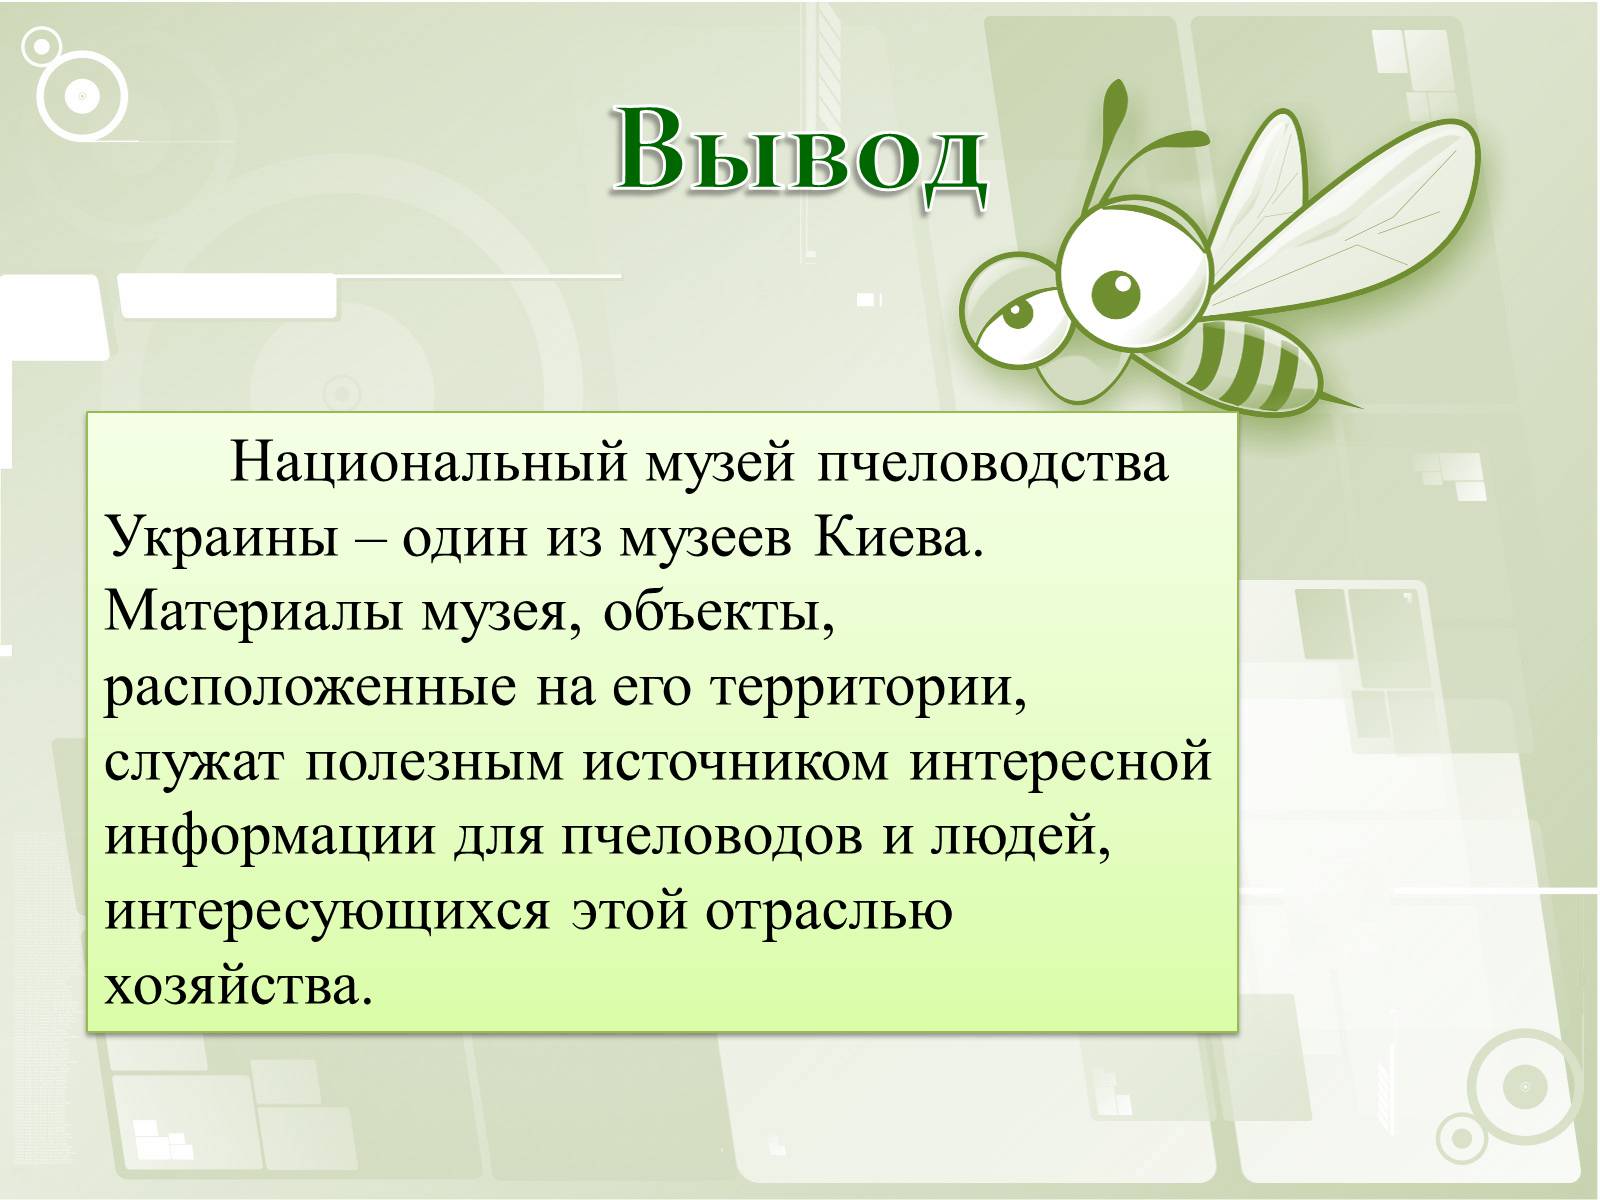 Презентація на тему «Национальный музей пчеловодства Украины» - Слайд #15